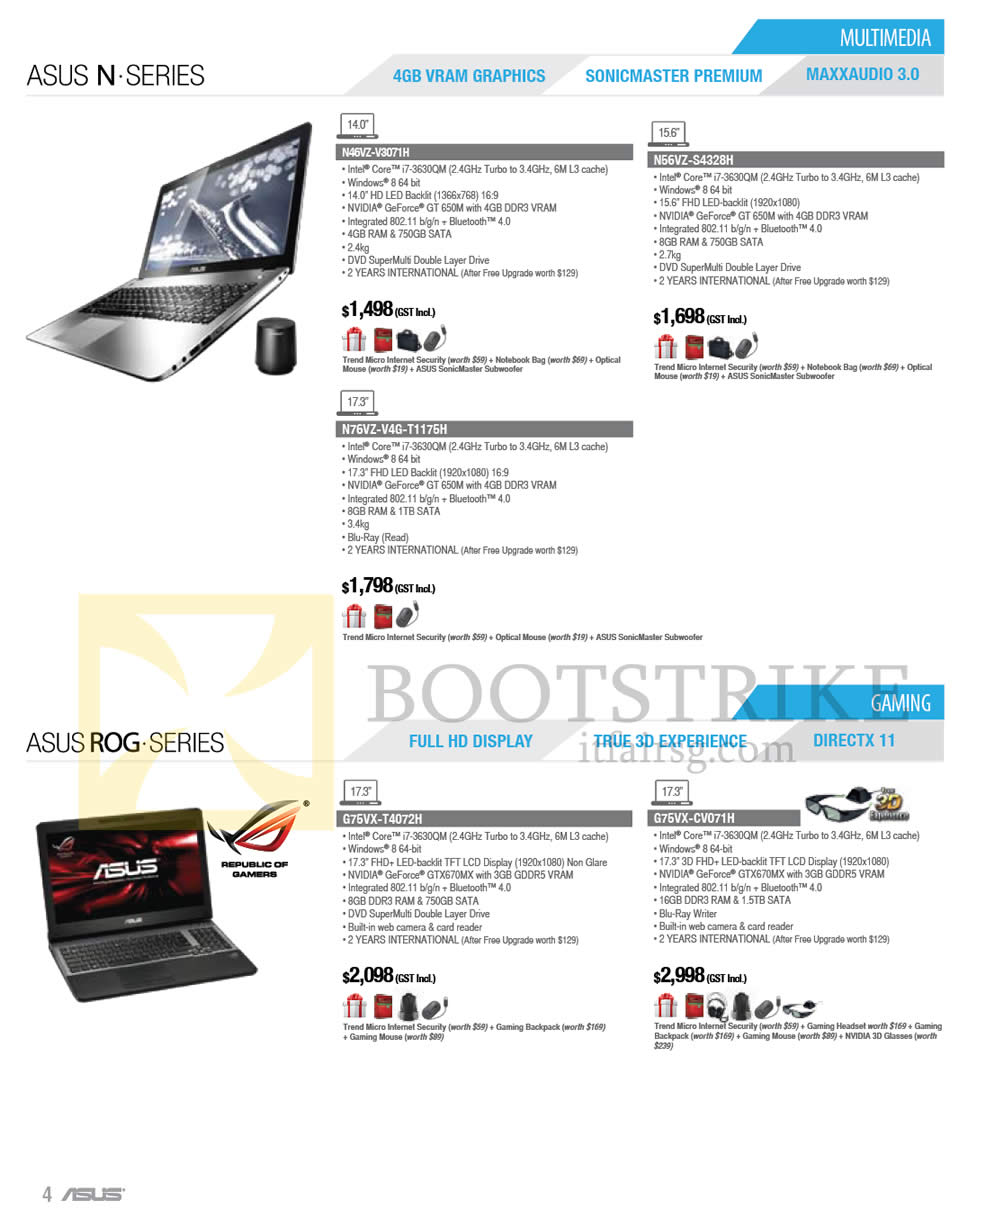 IT SHOW 2013 price list image brochure of ASUS Notebooks N46VZ-V3071H, N56VZ-S4328H, N76VZ-V4G-T1175H, ROG G75VX-T4072H, G75VX-CV071H